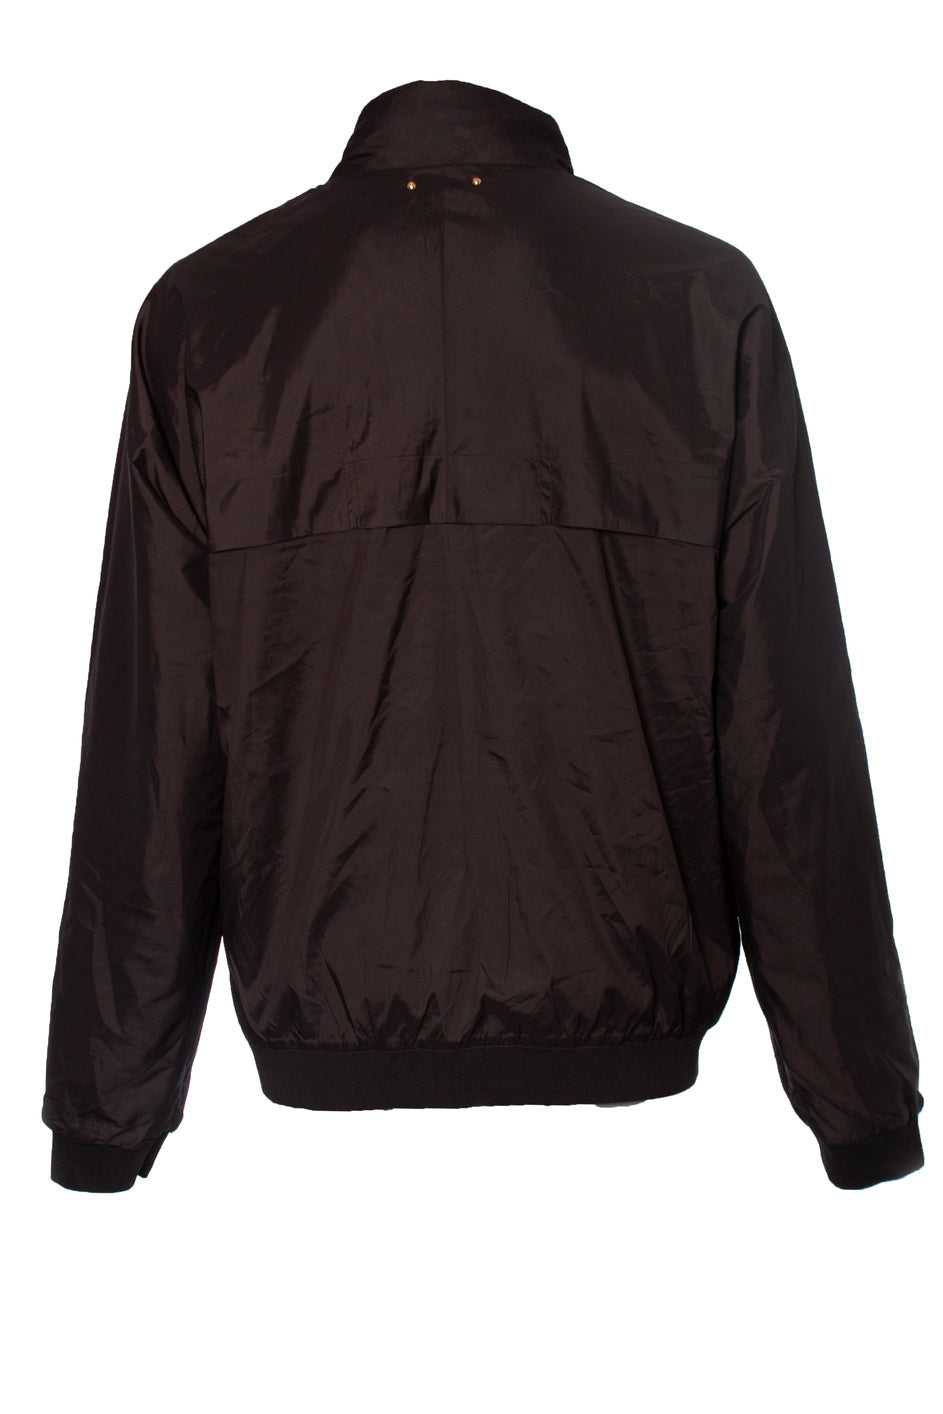 Louis Vuitton Louis vuitton gray damier reversible bomber jacket